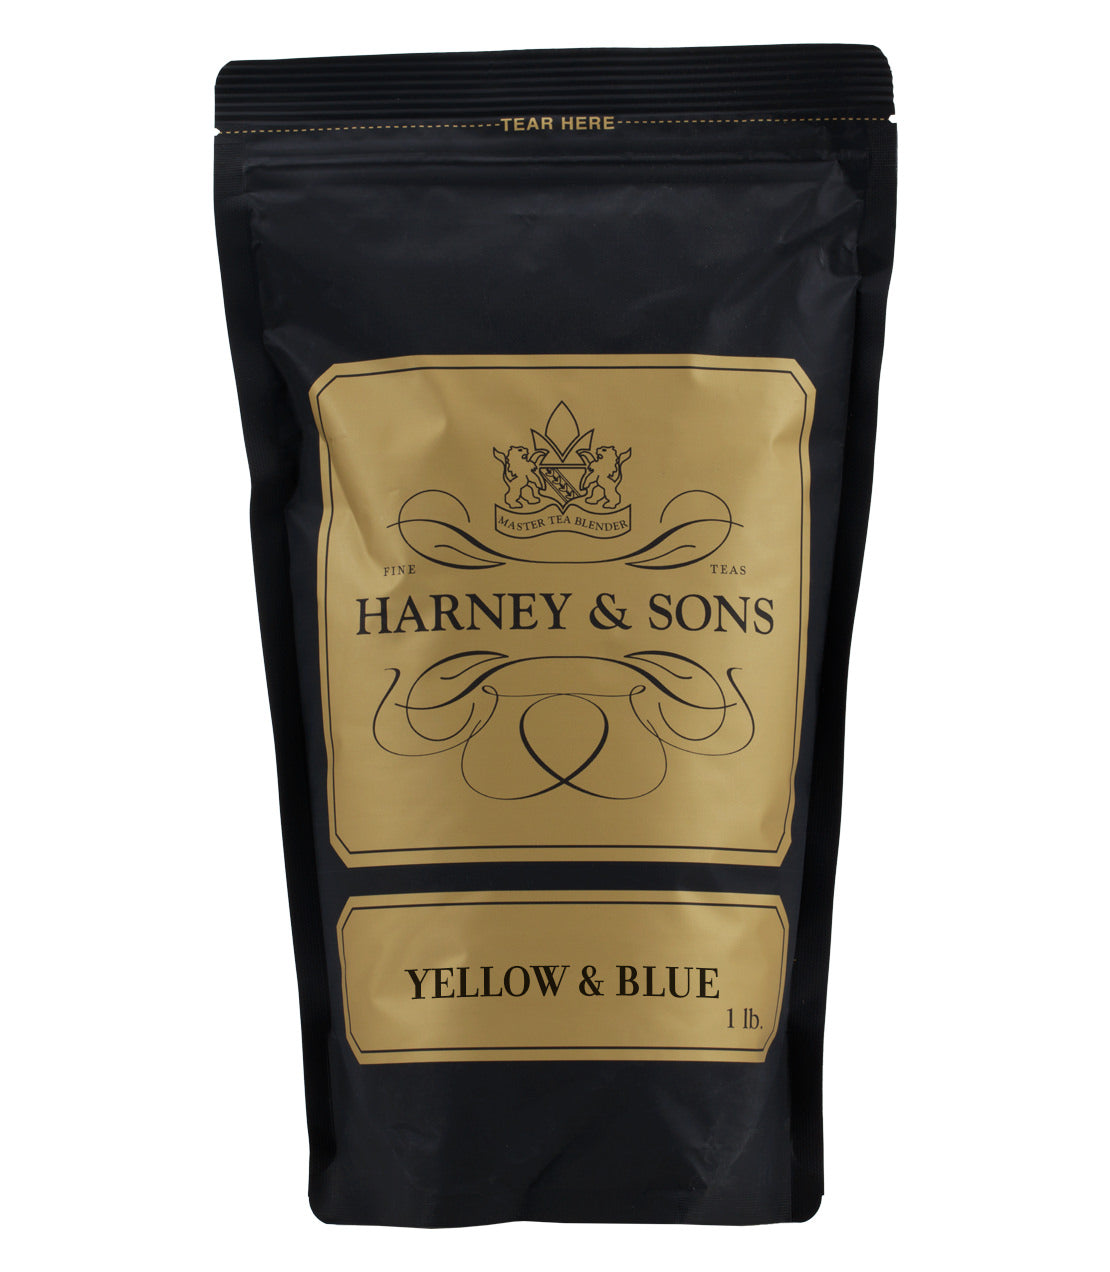 Yellow & Blue - Loose 1 lb. Bag - Harney & Sons Fine Teas